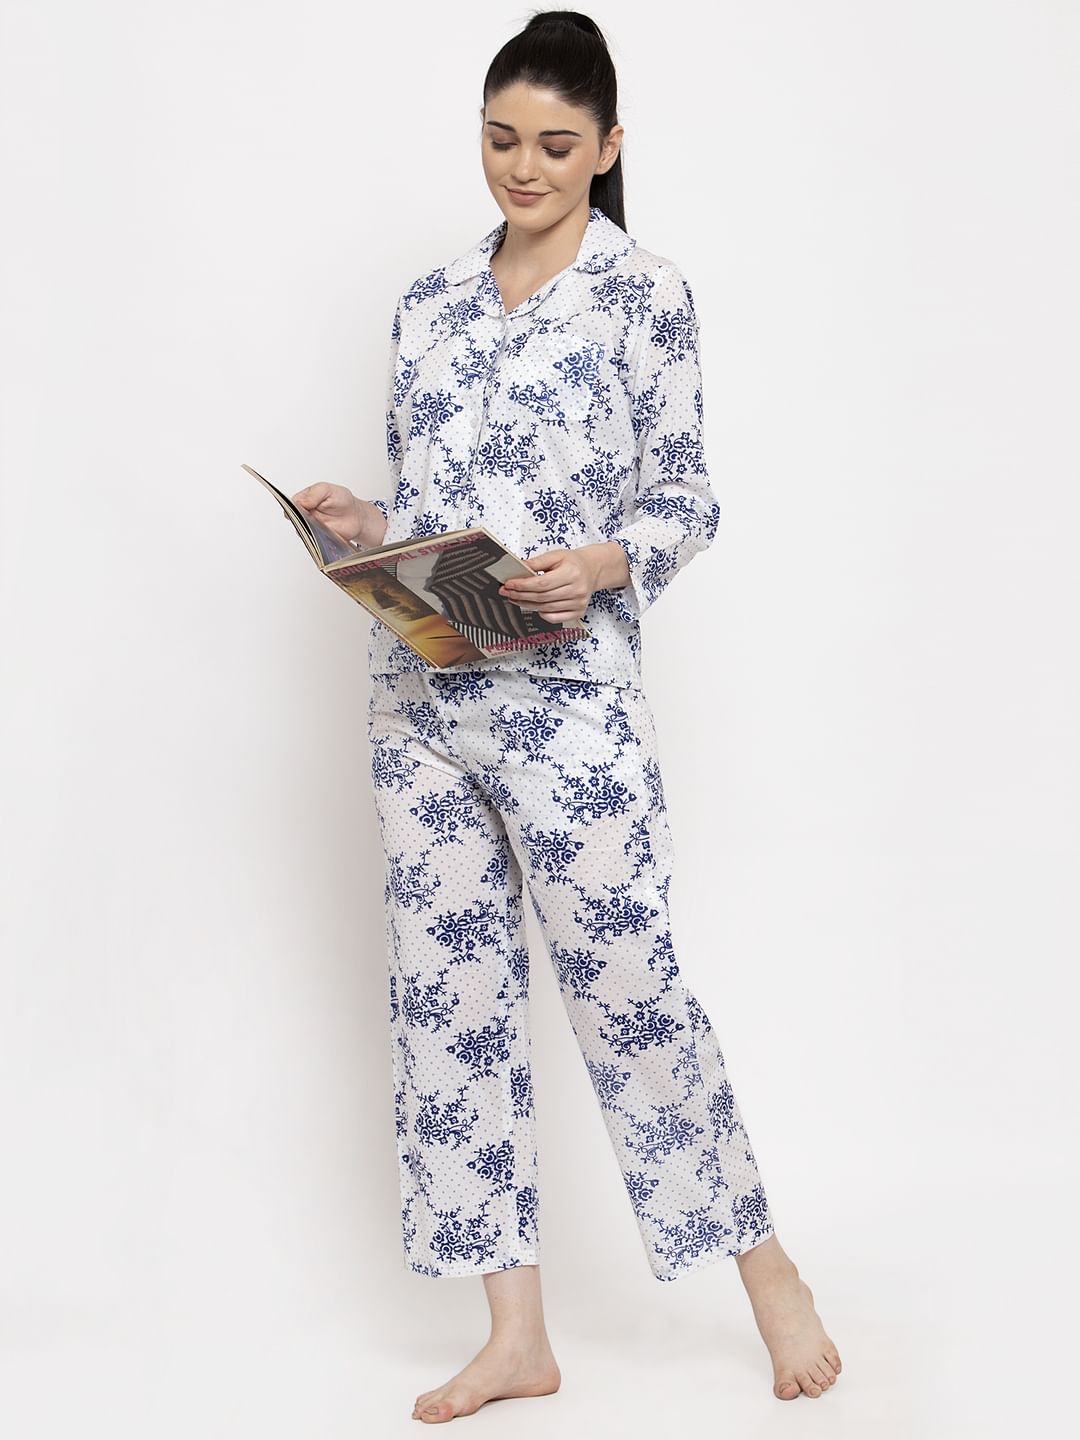 Secret Wish Women's White-Blue Cotton Floral Print Nightsuit 